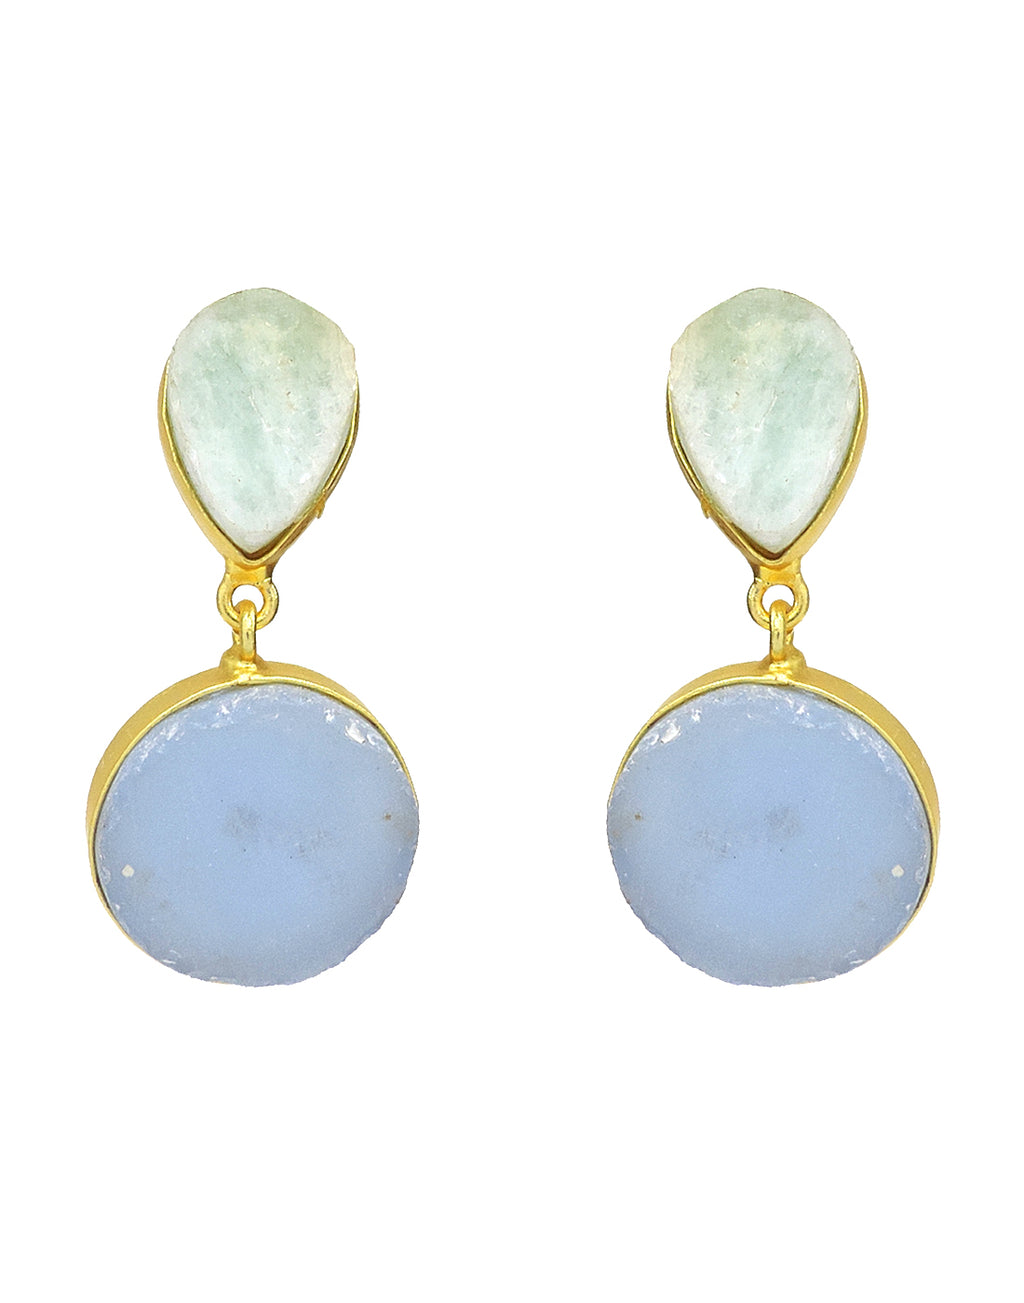 Blue Onyx & Amazonite Earrings - Statement Earrings - Gold-Plated & Hypoallergenic Jewellery - Made in India - Dubai Jewellery - Dori